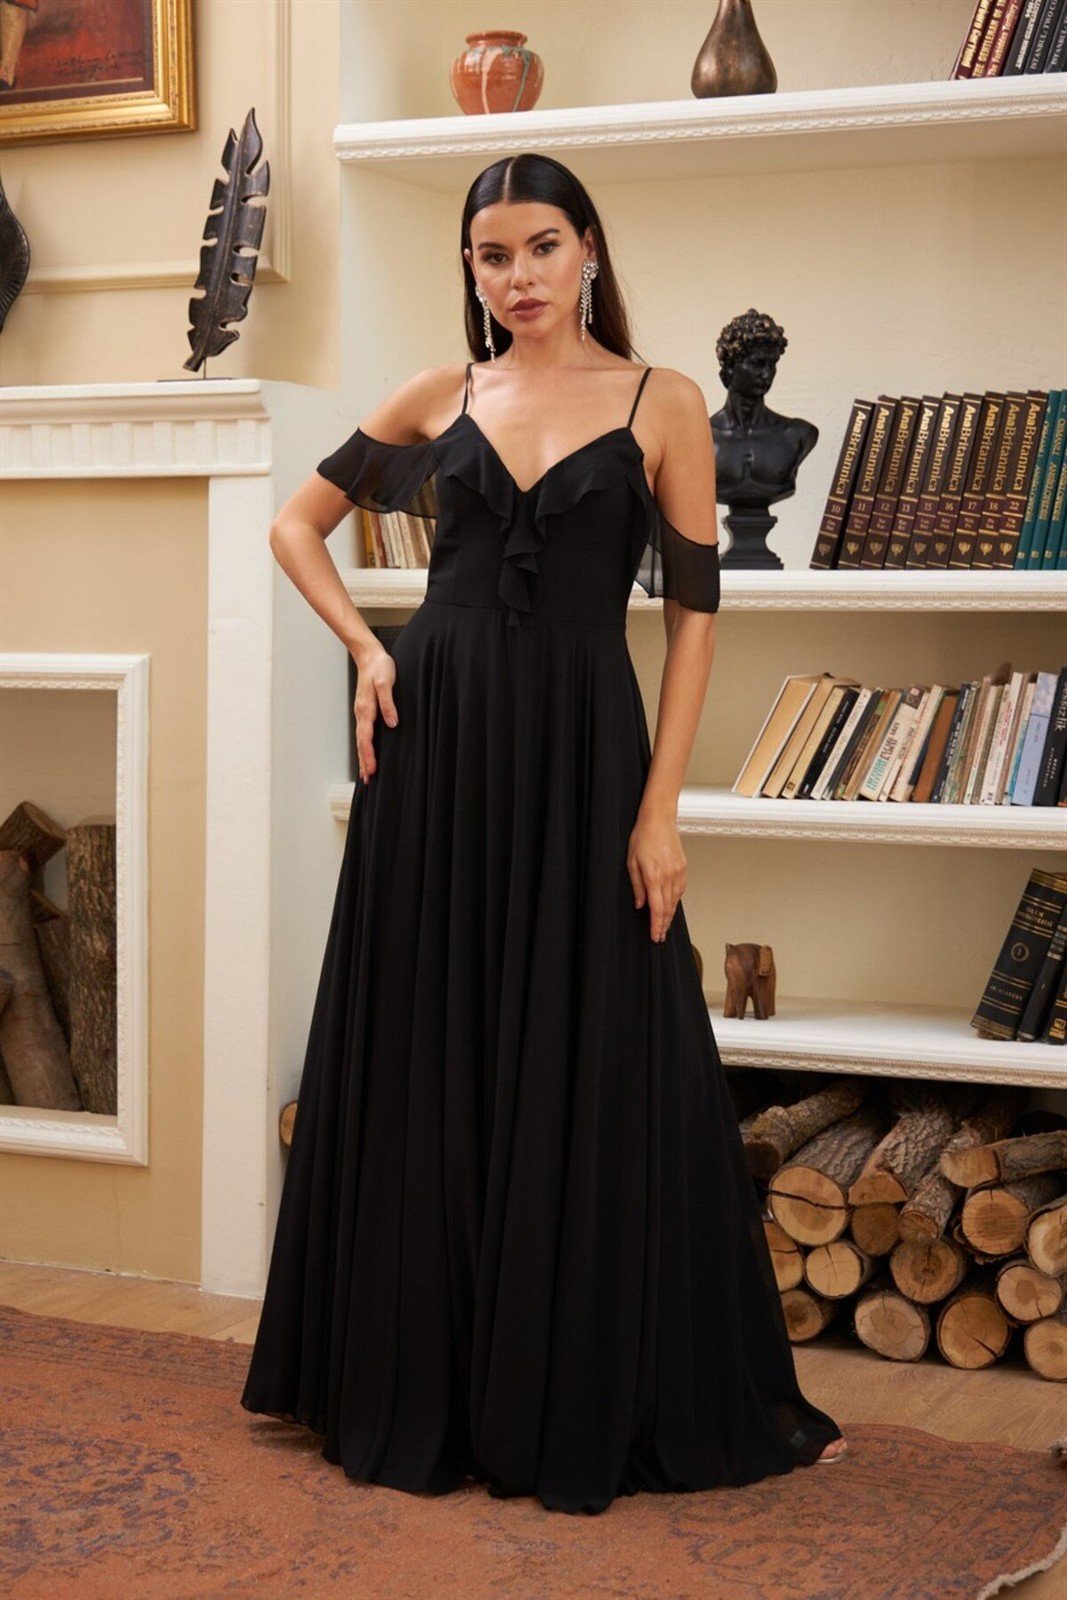 Carmen Black Chiffon Long Evening Dress with Ruffles on the chest.